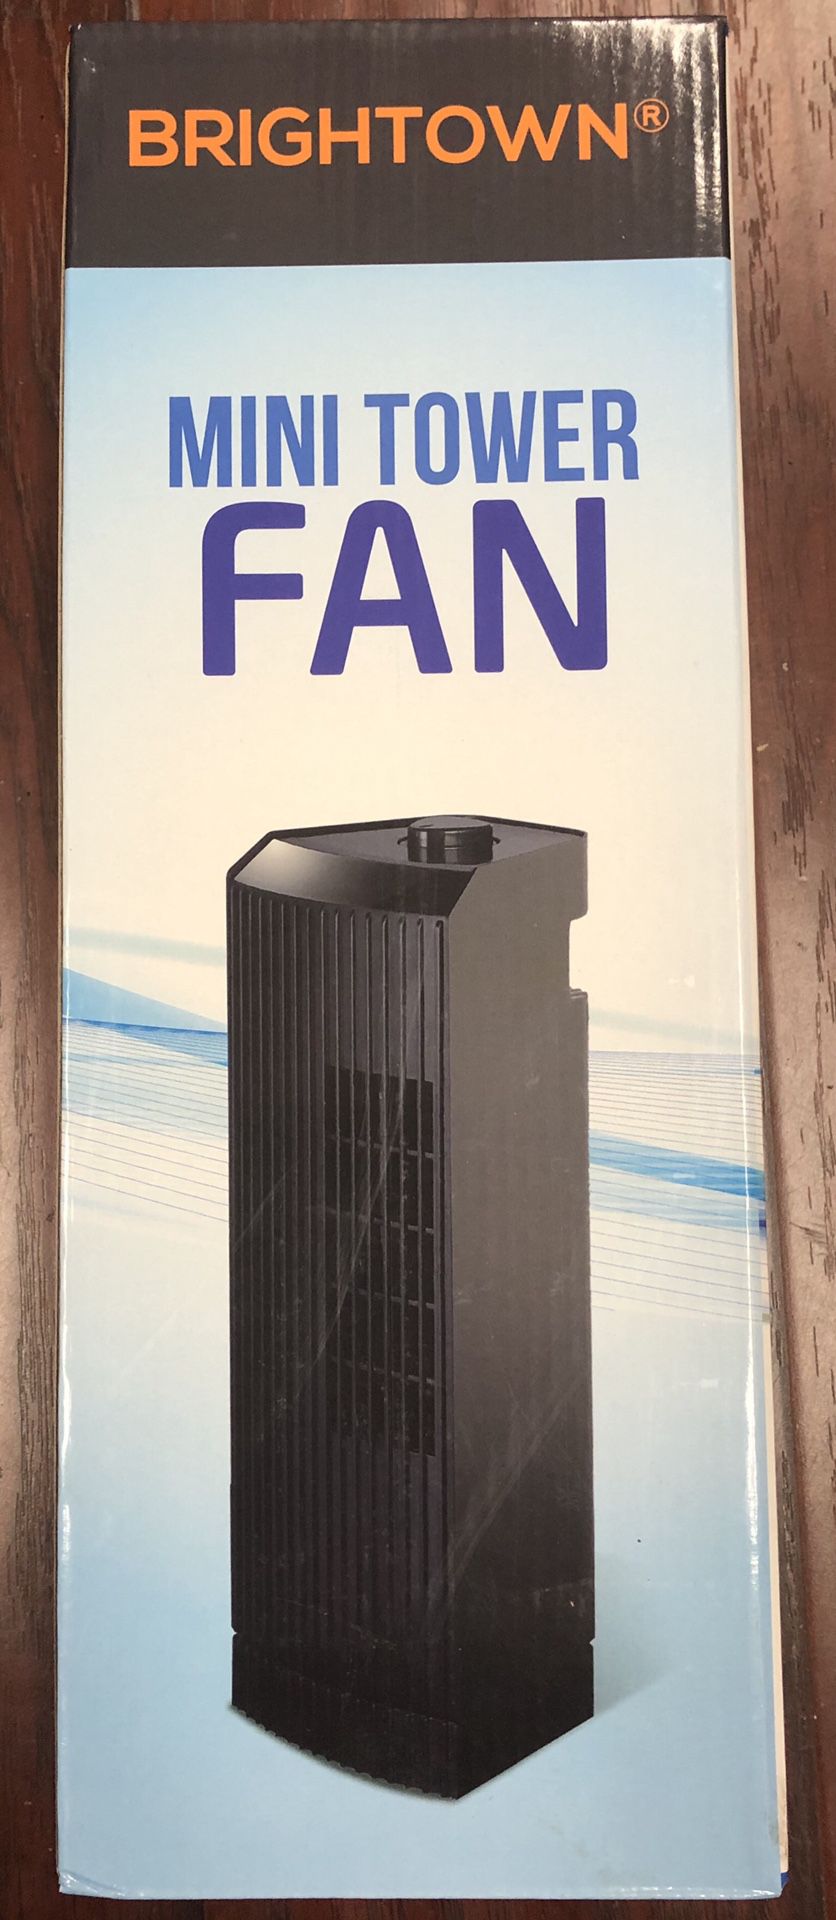 14” Oscillating Mini Tower Desk Fan - 6 Settings - Black - All Brand New in the Box